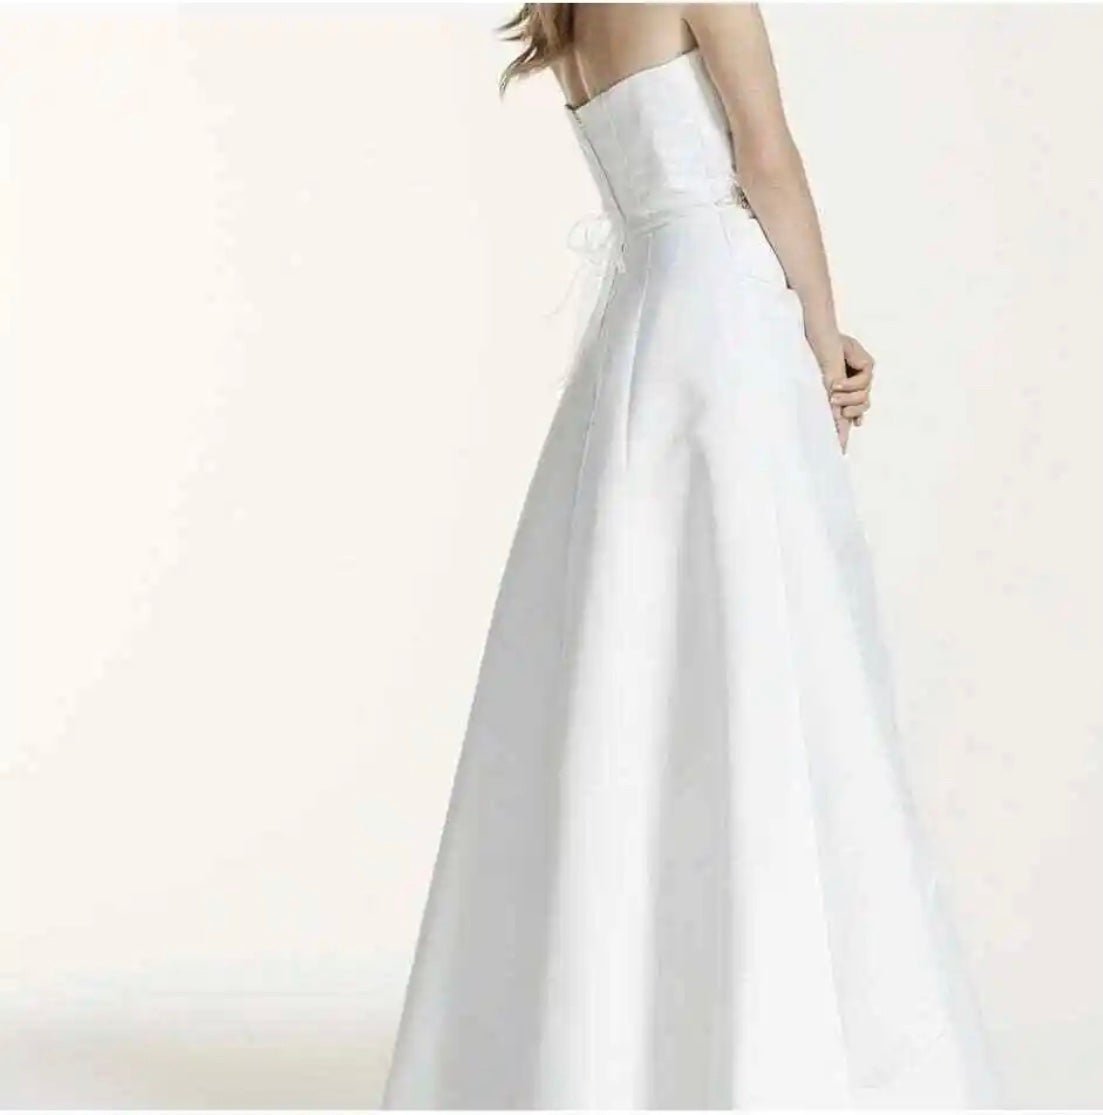 Beautiful David’s bridal michaelangelo white satin a-line strapless wedding dress size 8 koaL53ta5 New Style